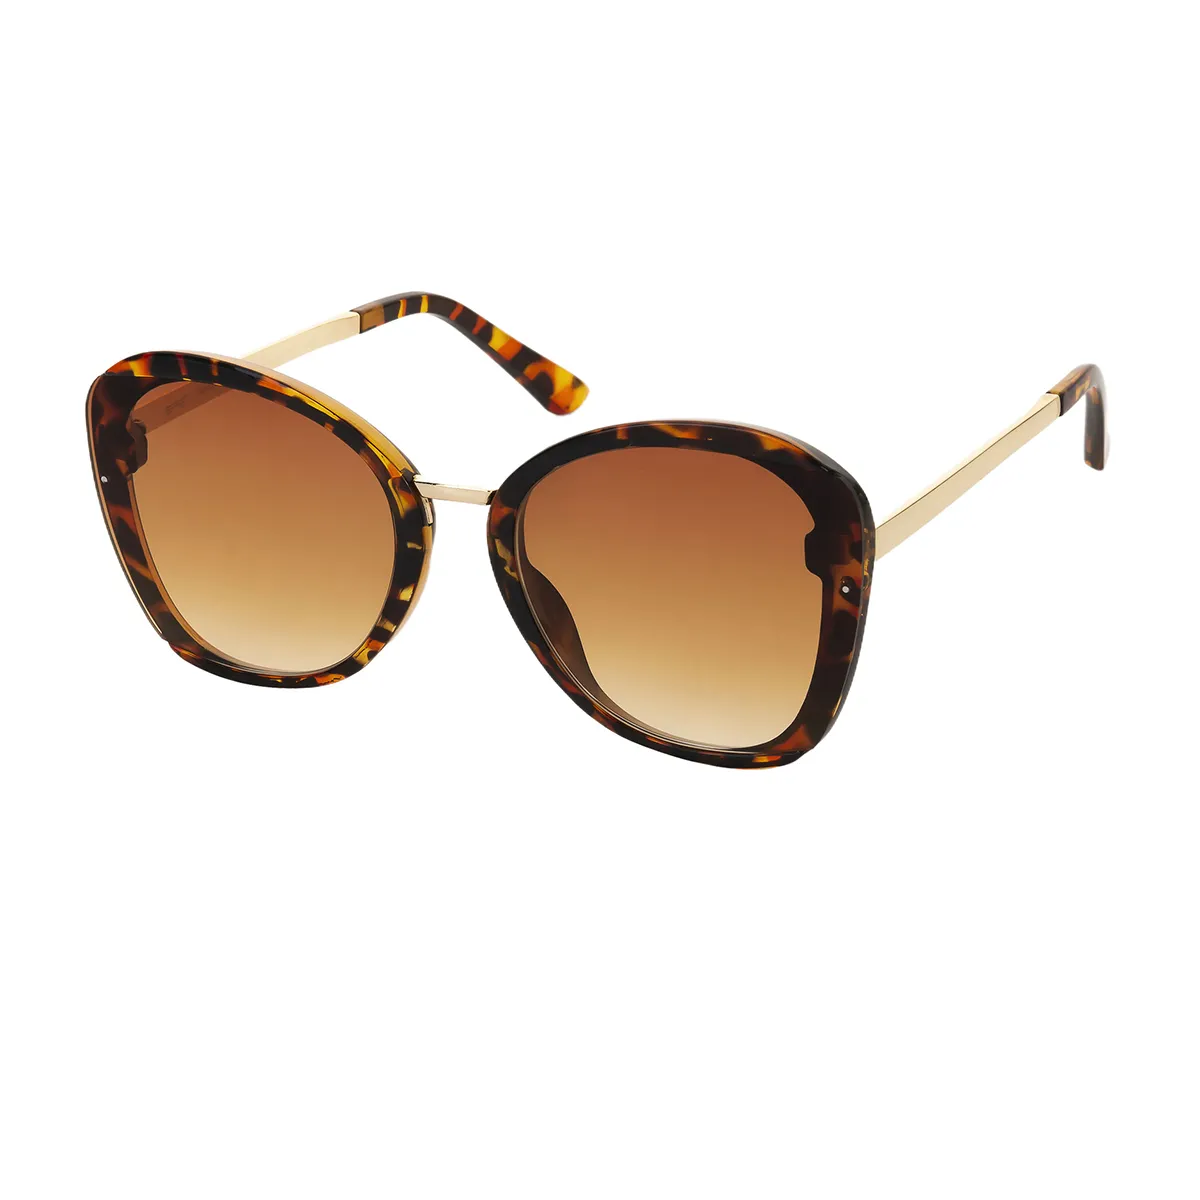 Mara - Oval Demi Sunglasses for Women